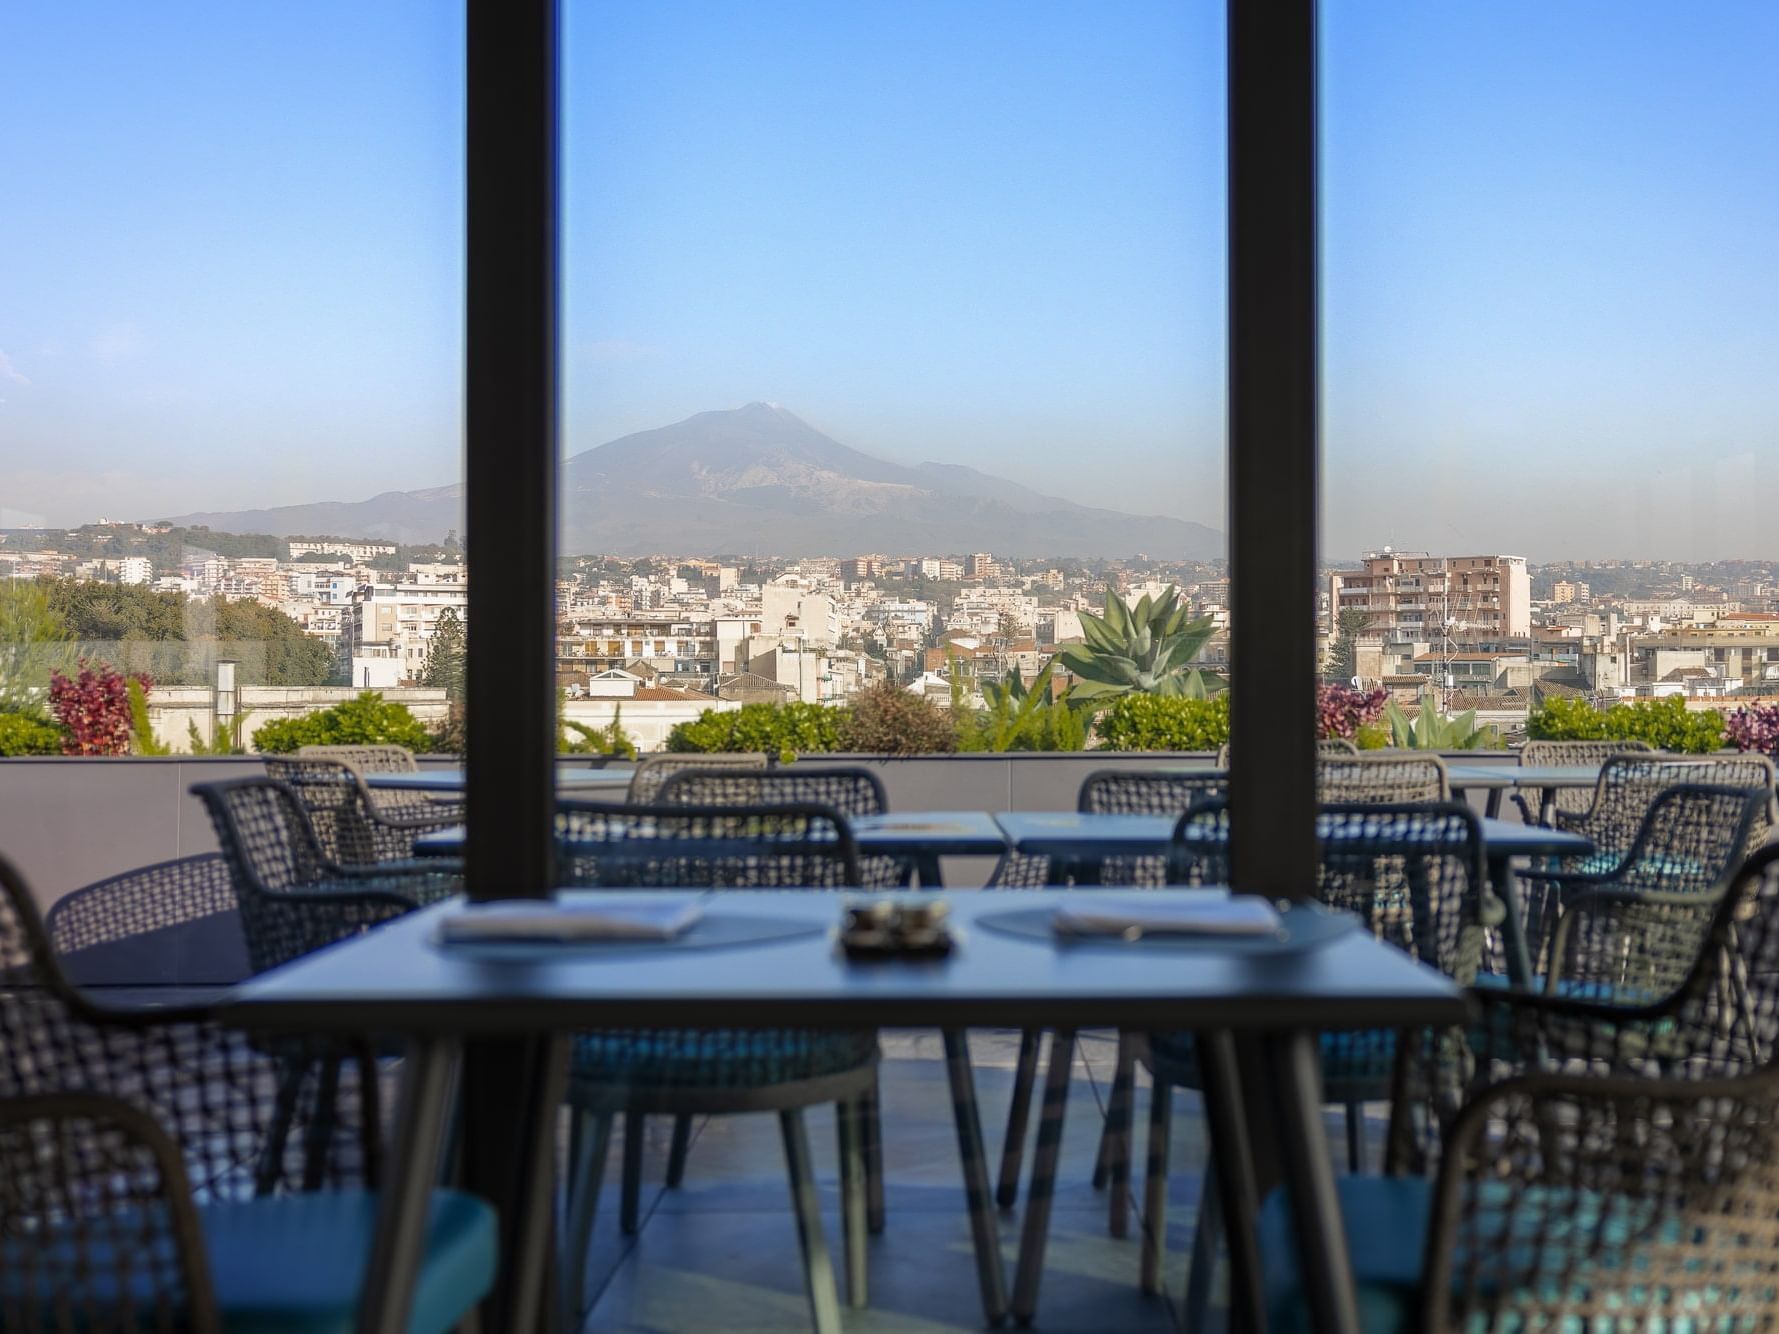 Etnea Roof Bar & Restaurant with views of Etna